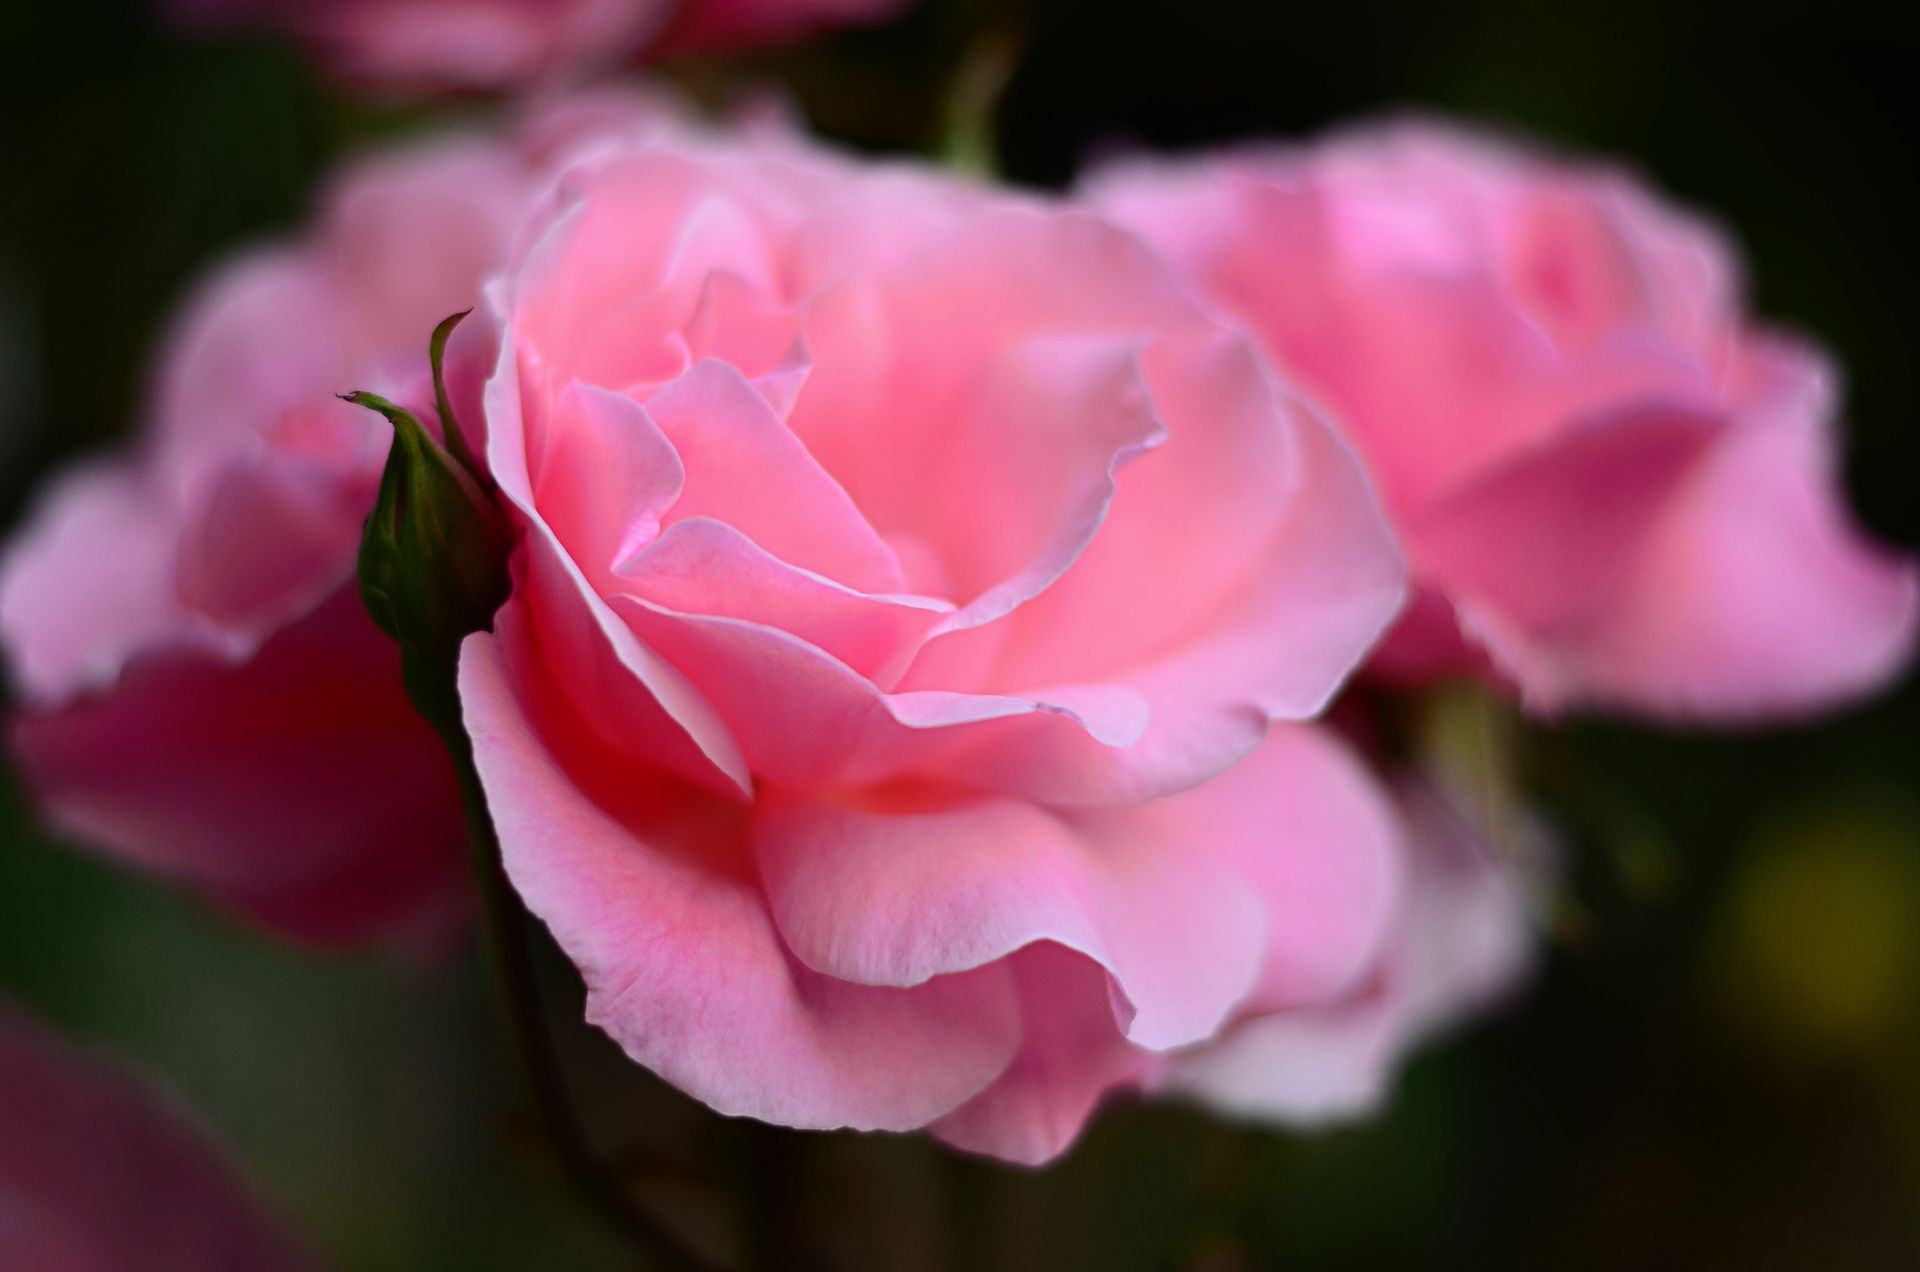 A pink rose bud